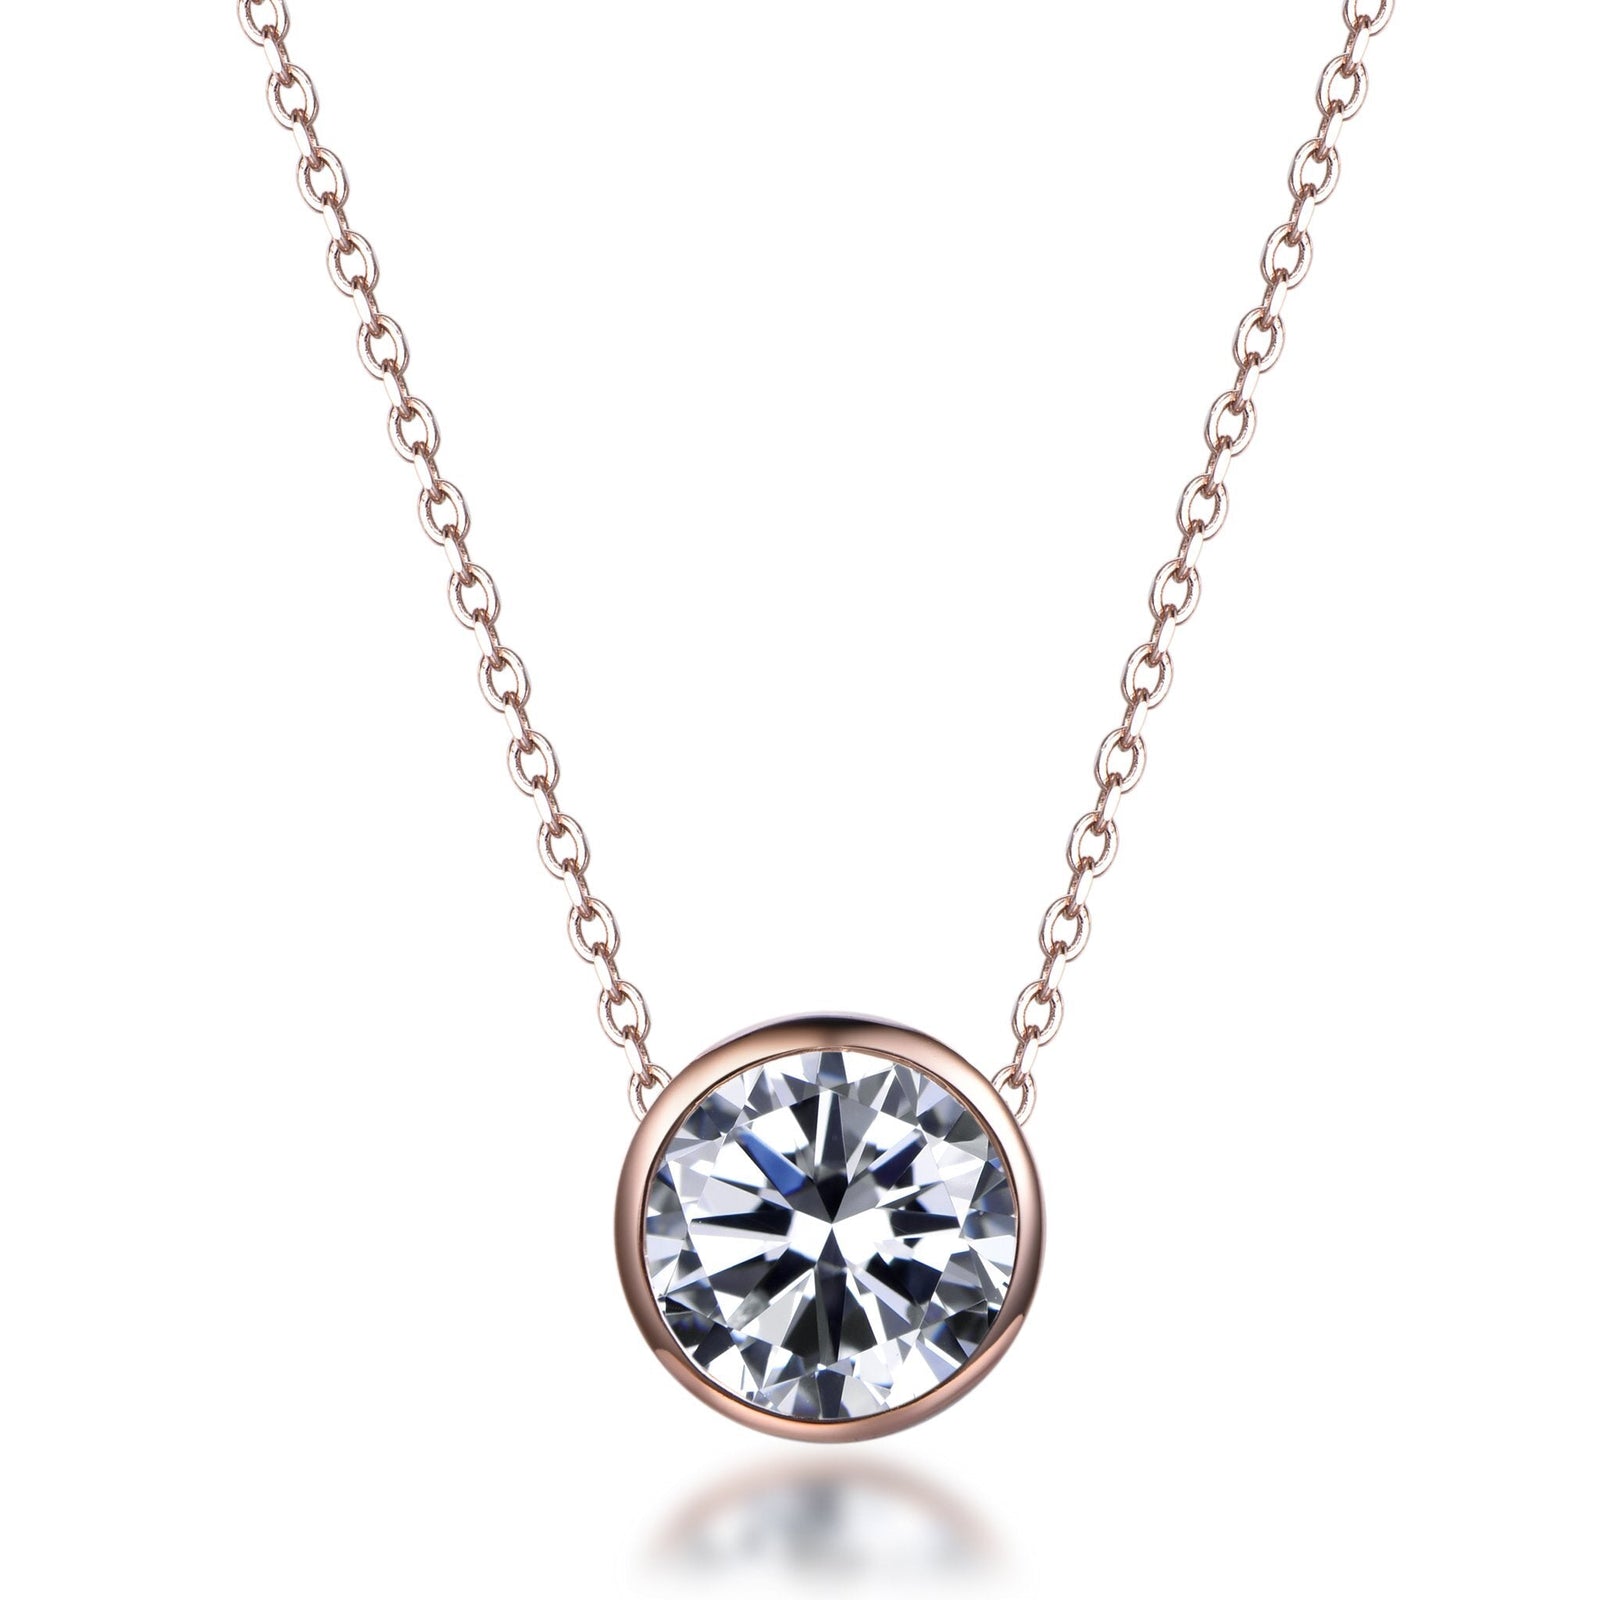 Lumeniri Bezel Set 14K Gold Round Cut Diamond Pendant Necklace on Chain